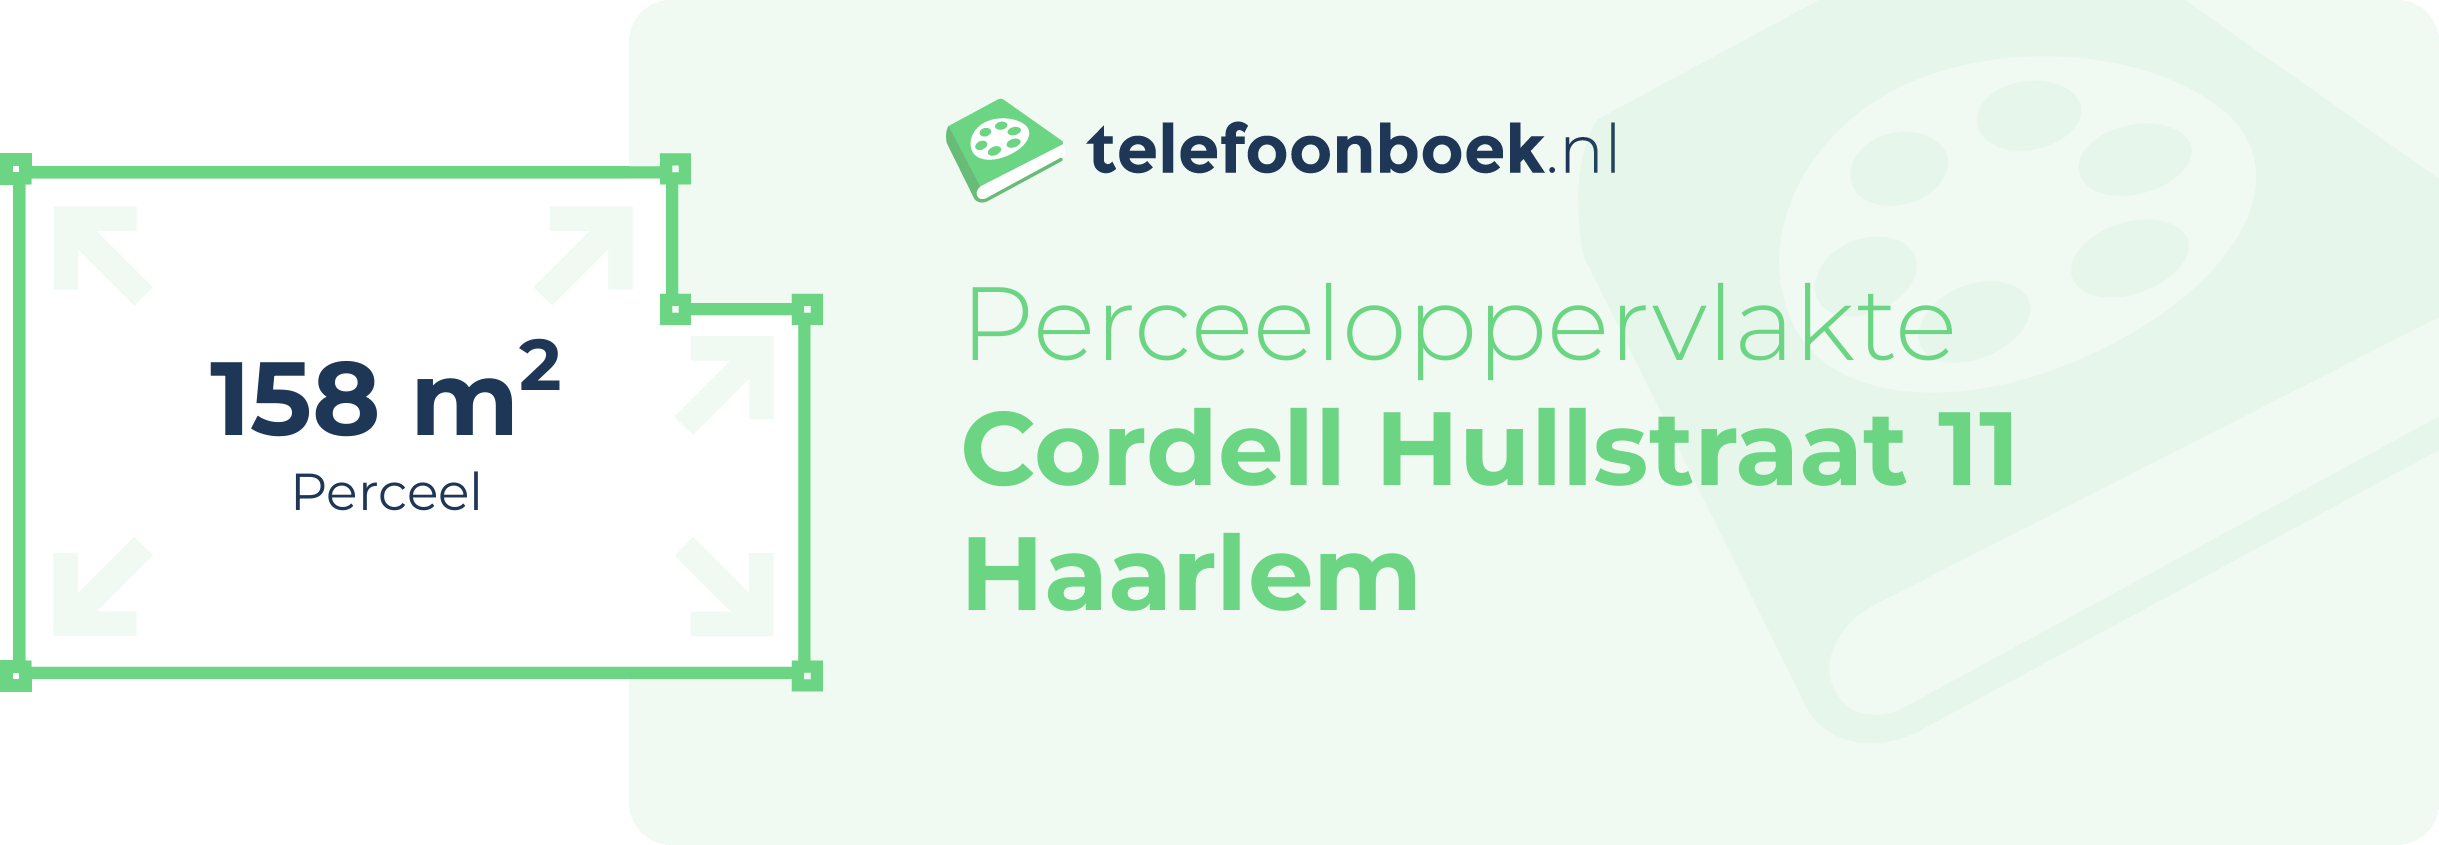 Perceeloppervlakte Cordell Hullstraat 11 Haarlem